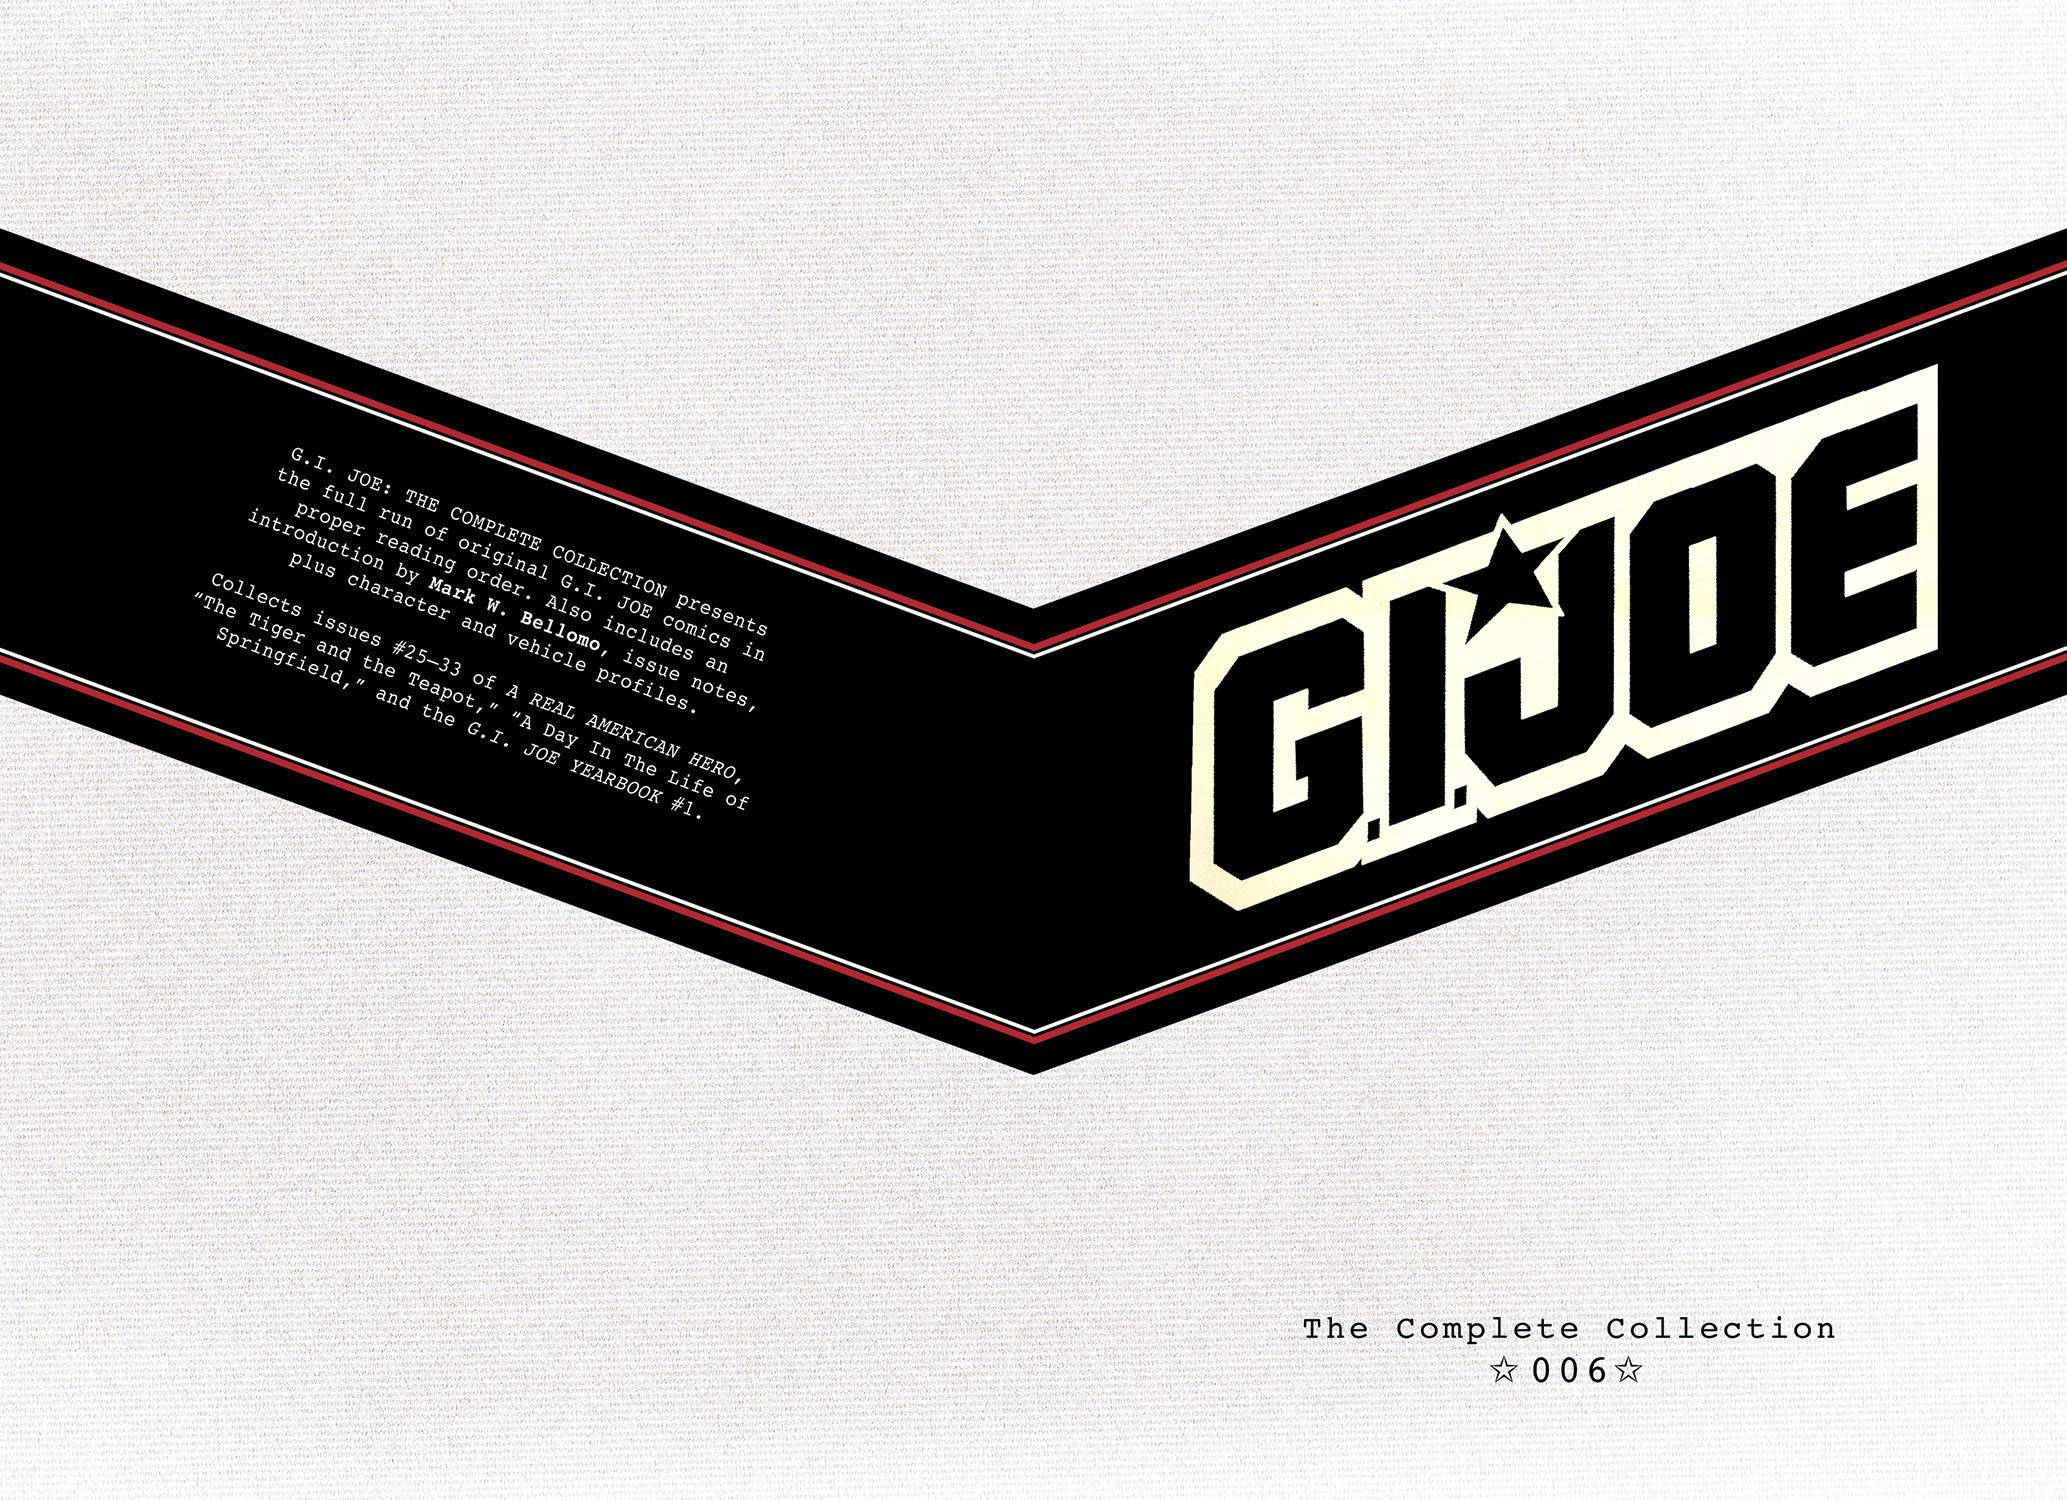 GI Joe Complete Collected Hardcover Volume 6